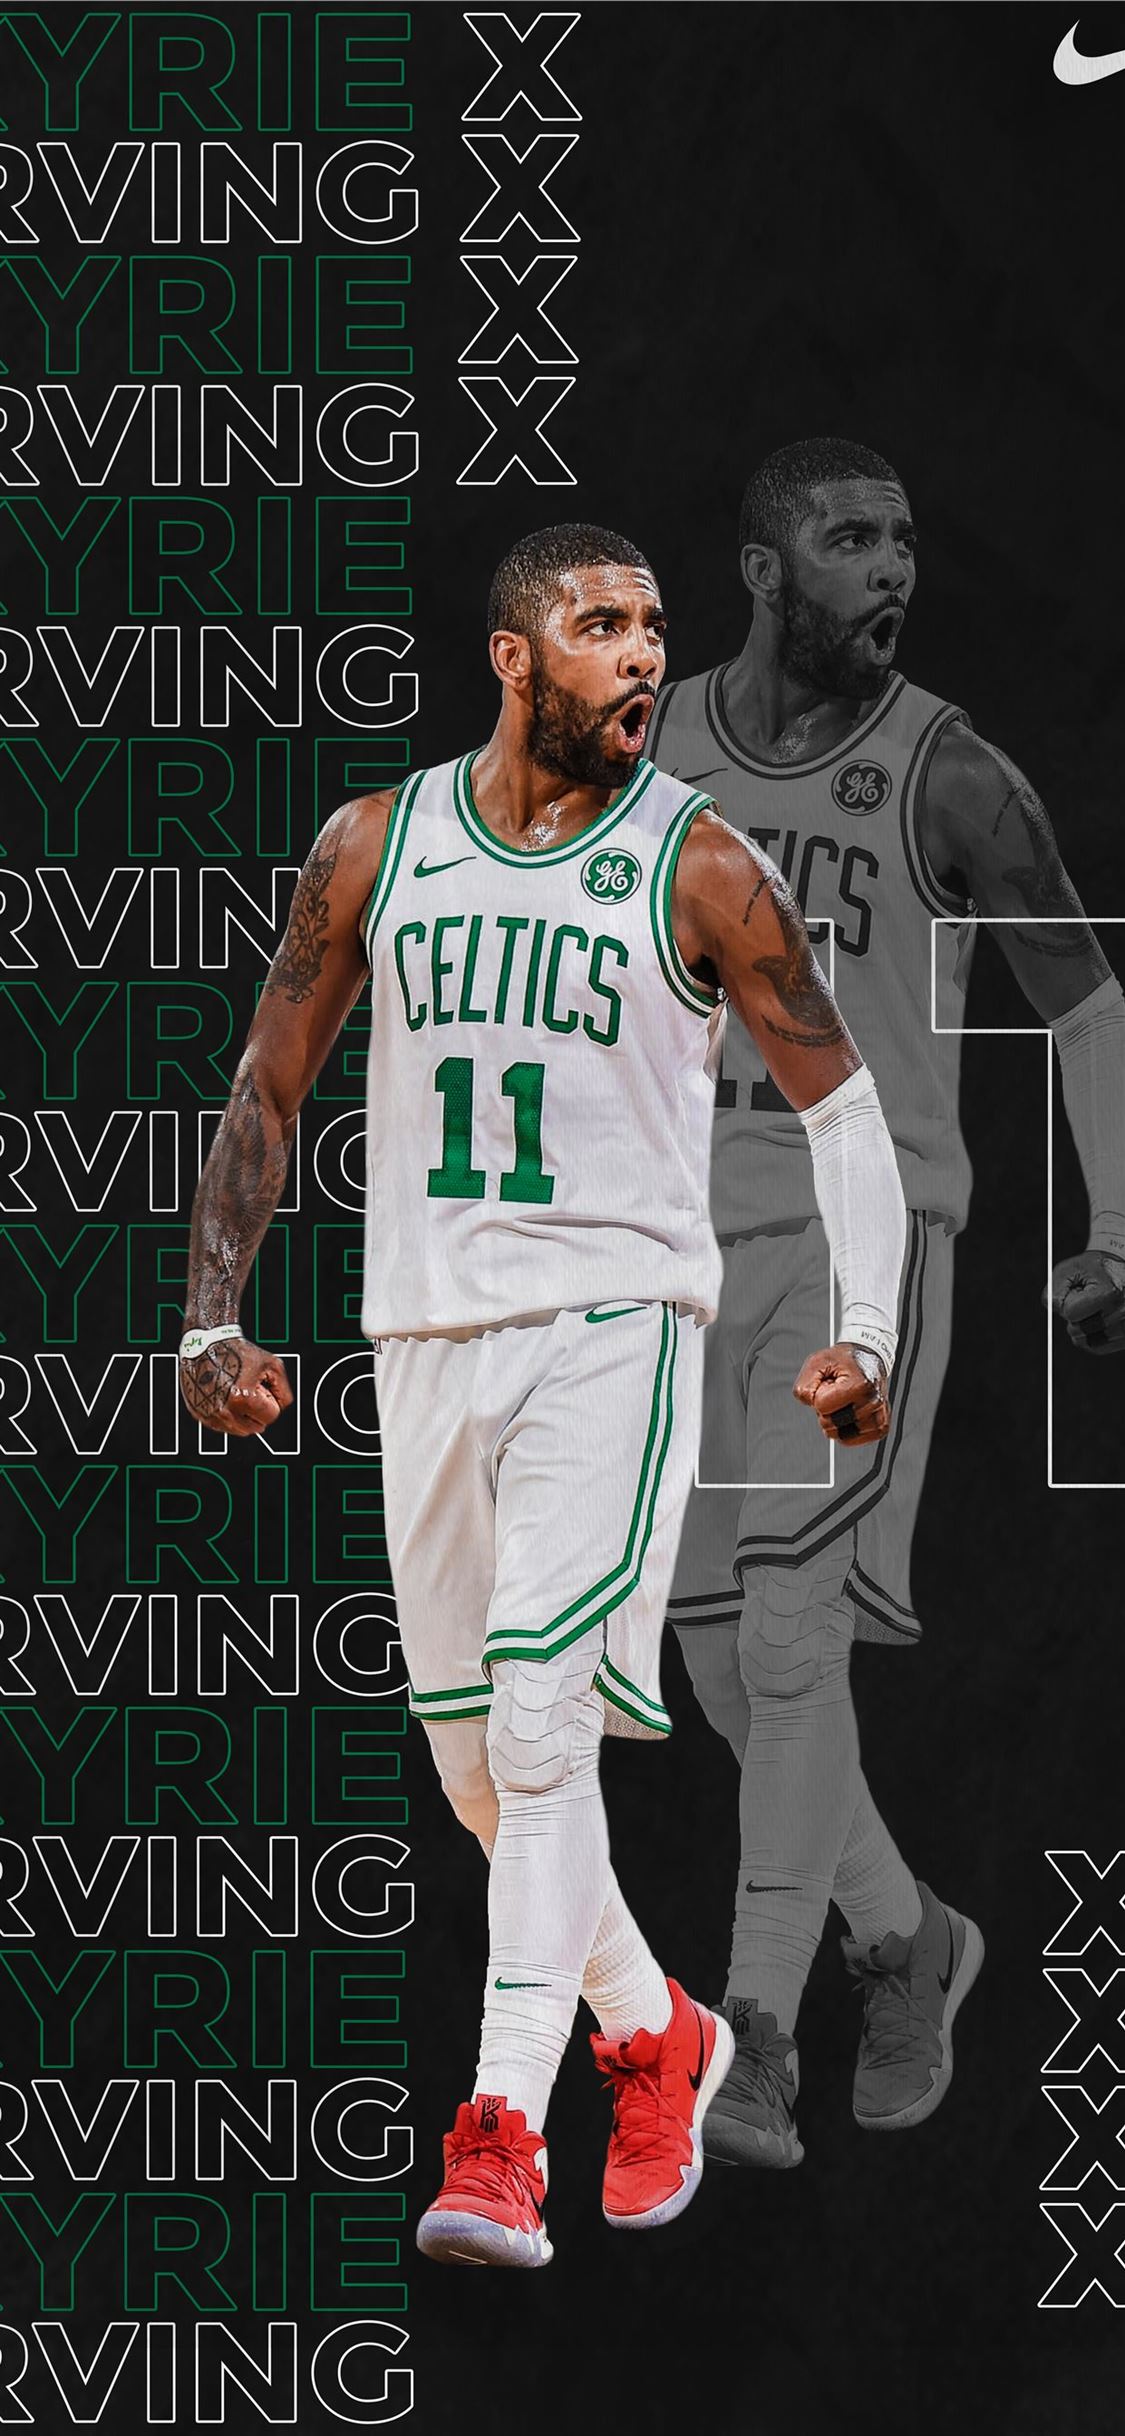 Boston Celtics Wallpapers - Top 22 Best Boston Celtics Wallpapers [ HQ ]